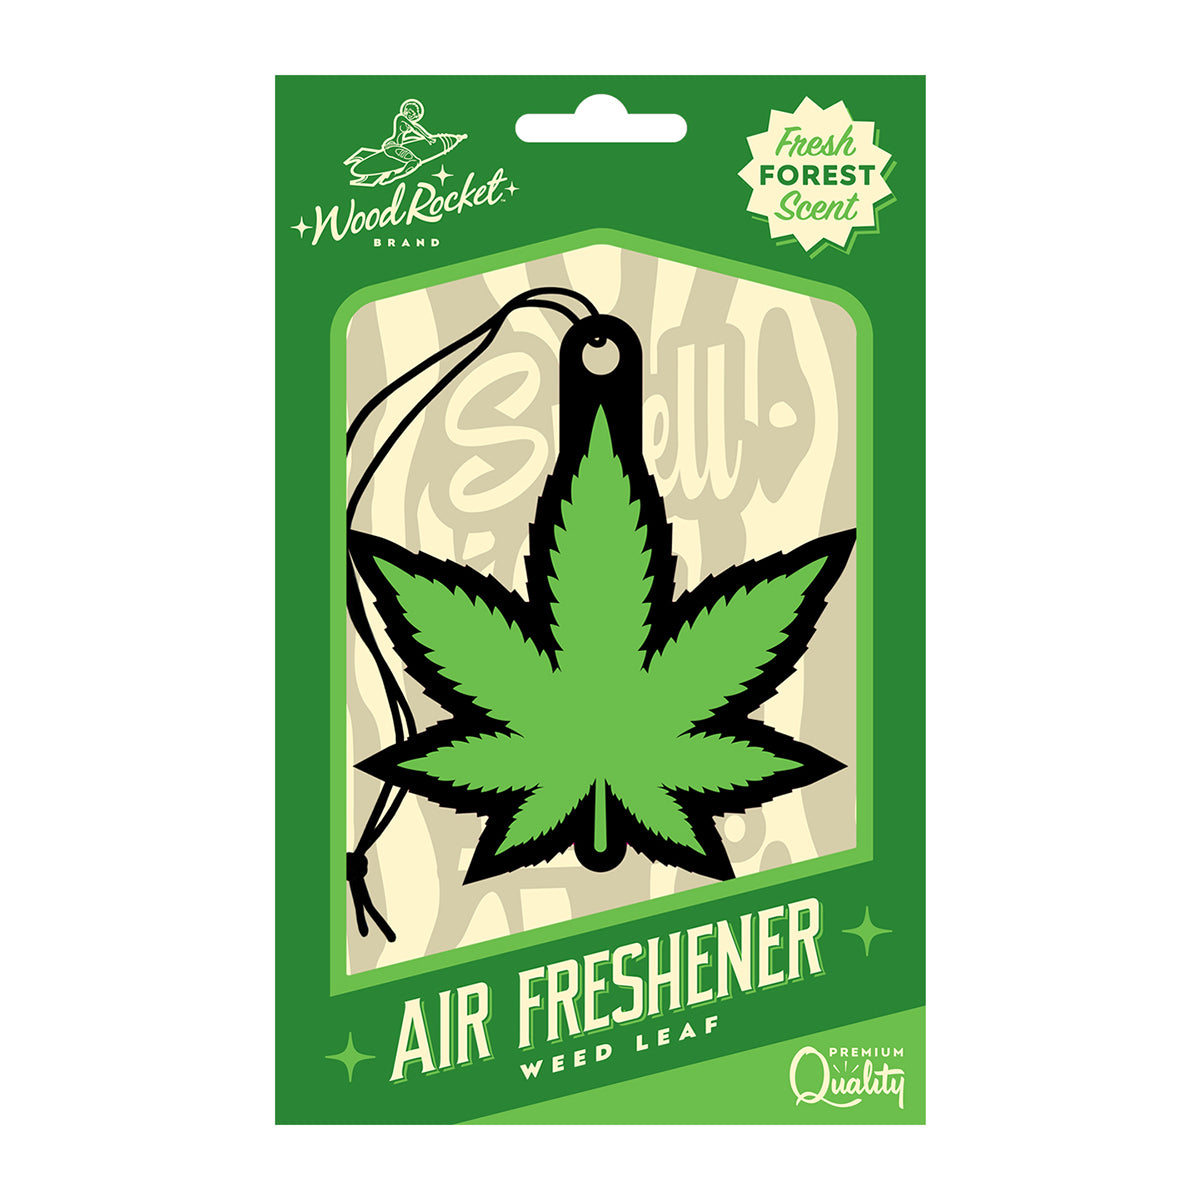 Wood Rocket Air Freshener Green Leaf